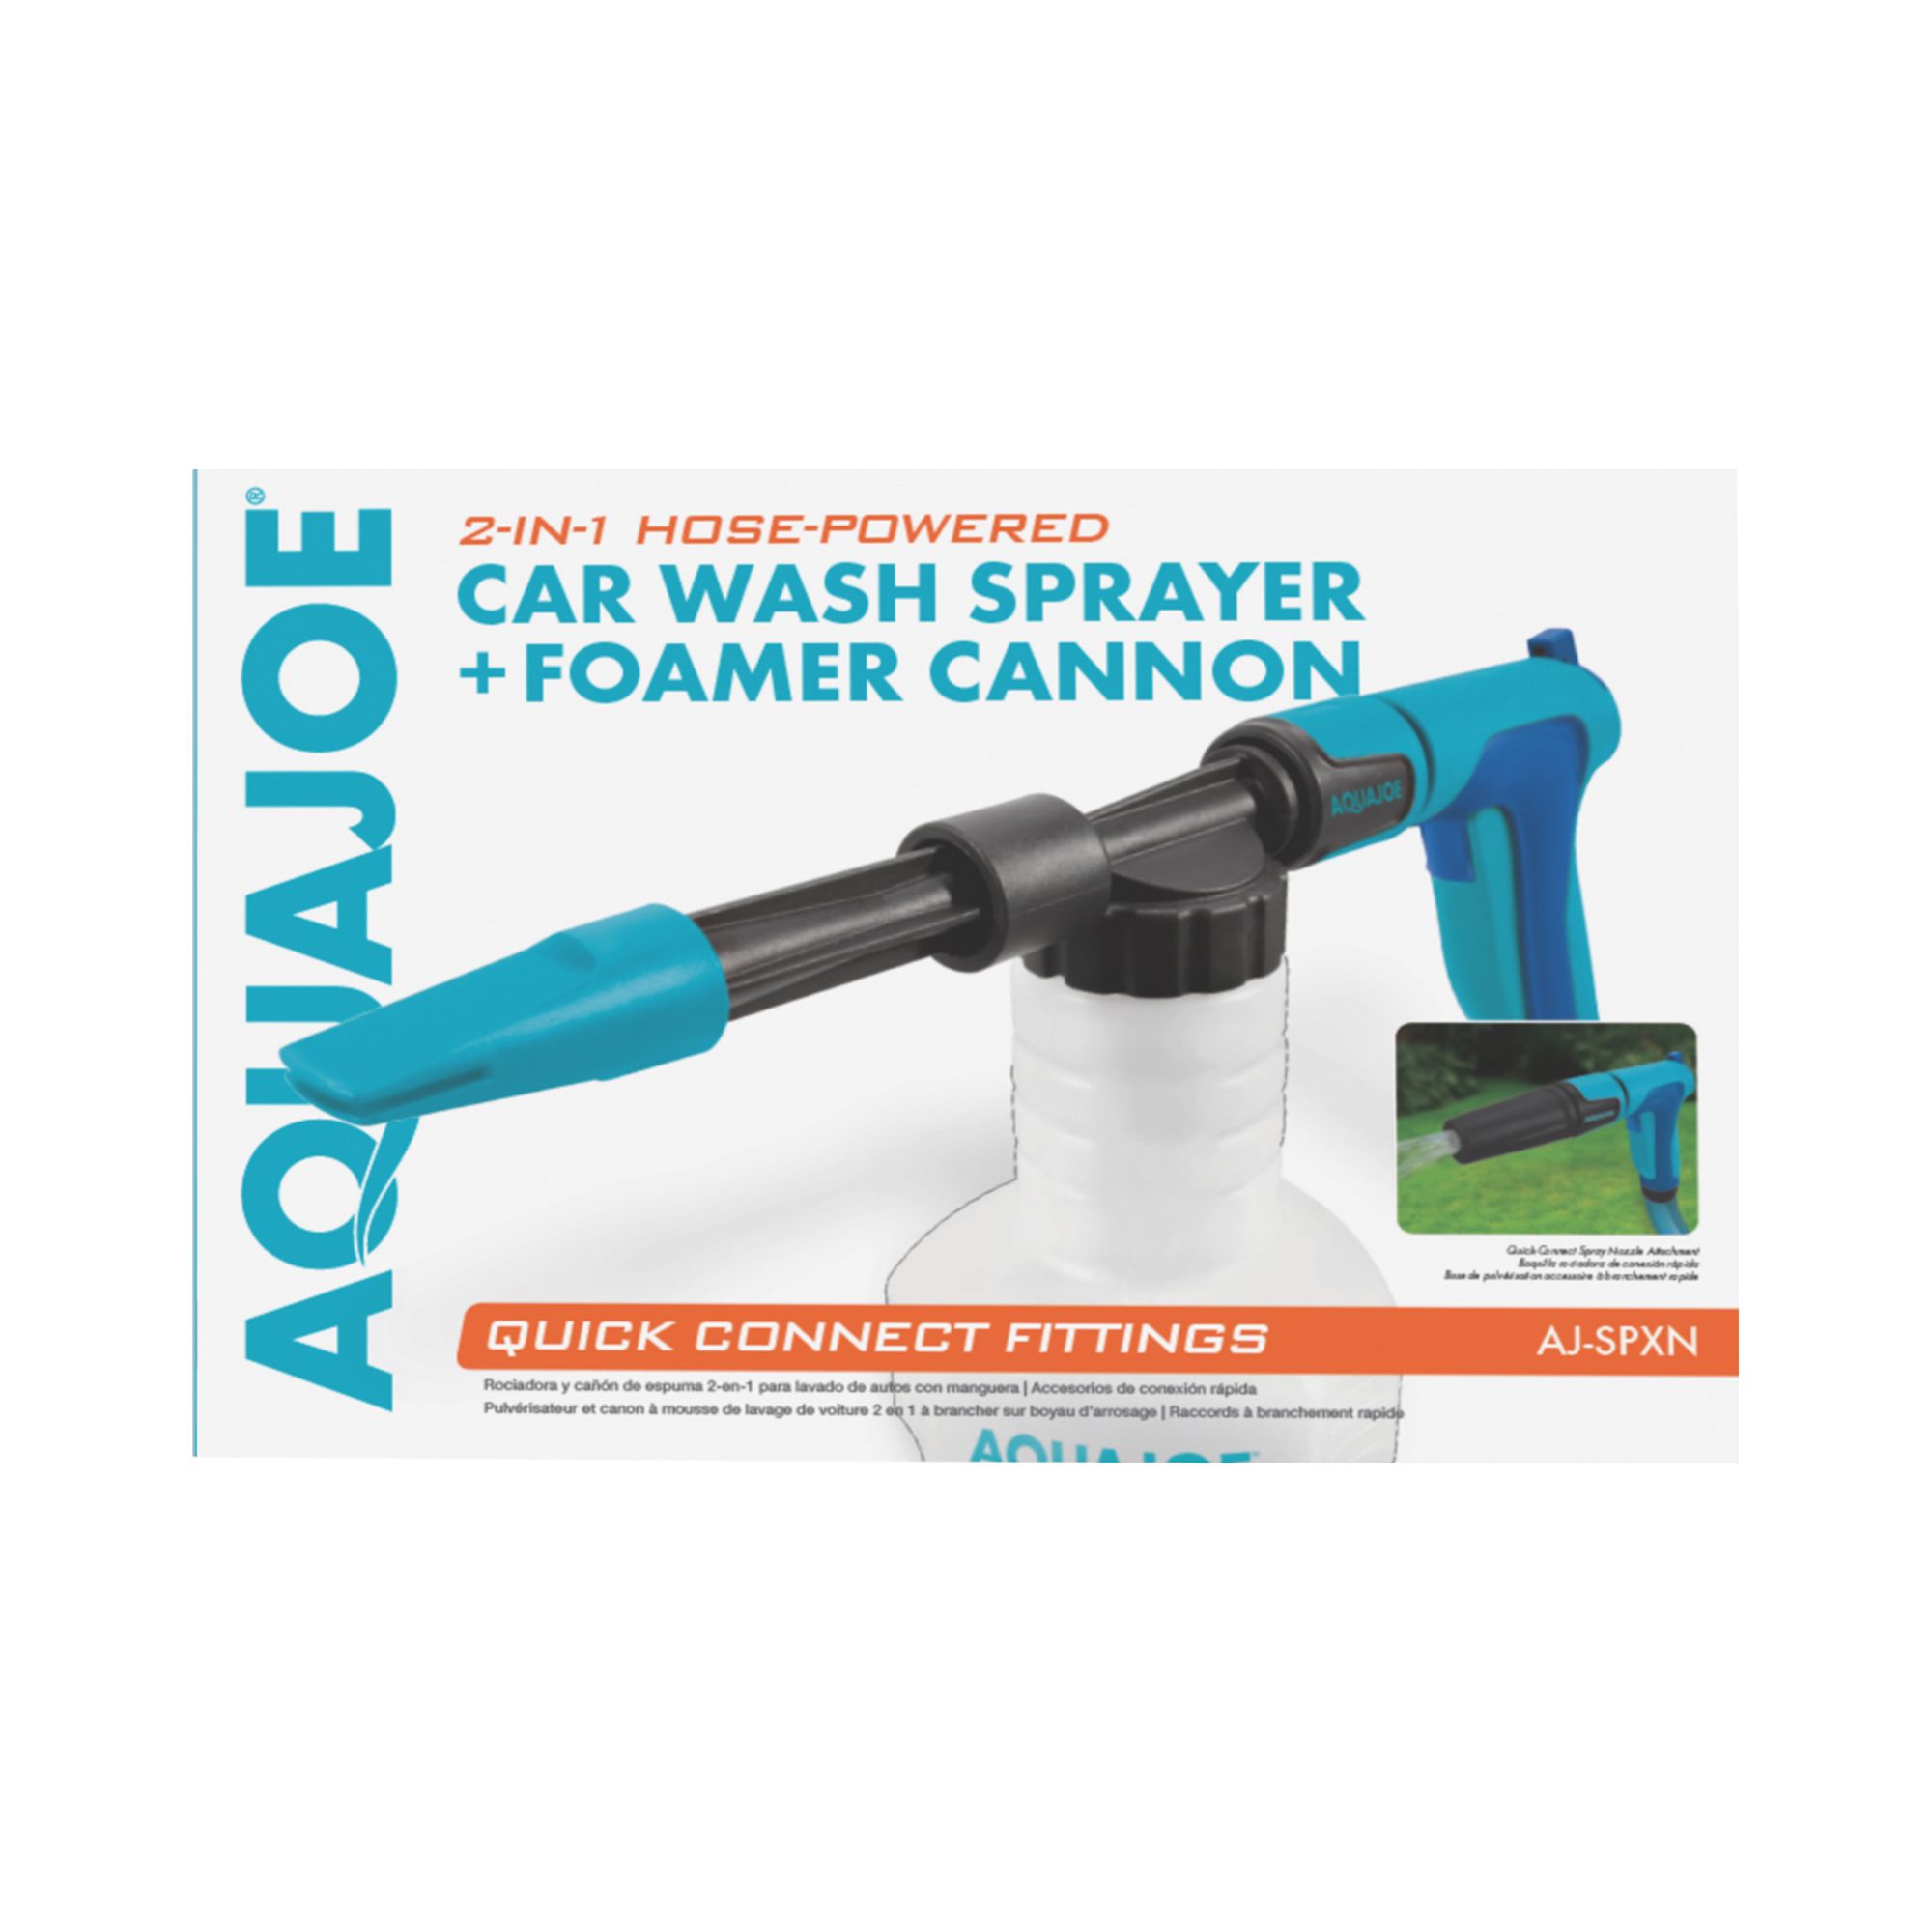 Detailing hand foamer and pump sprayer review 